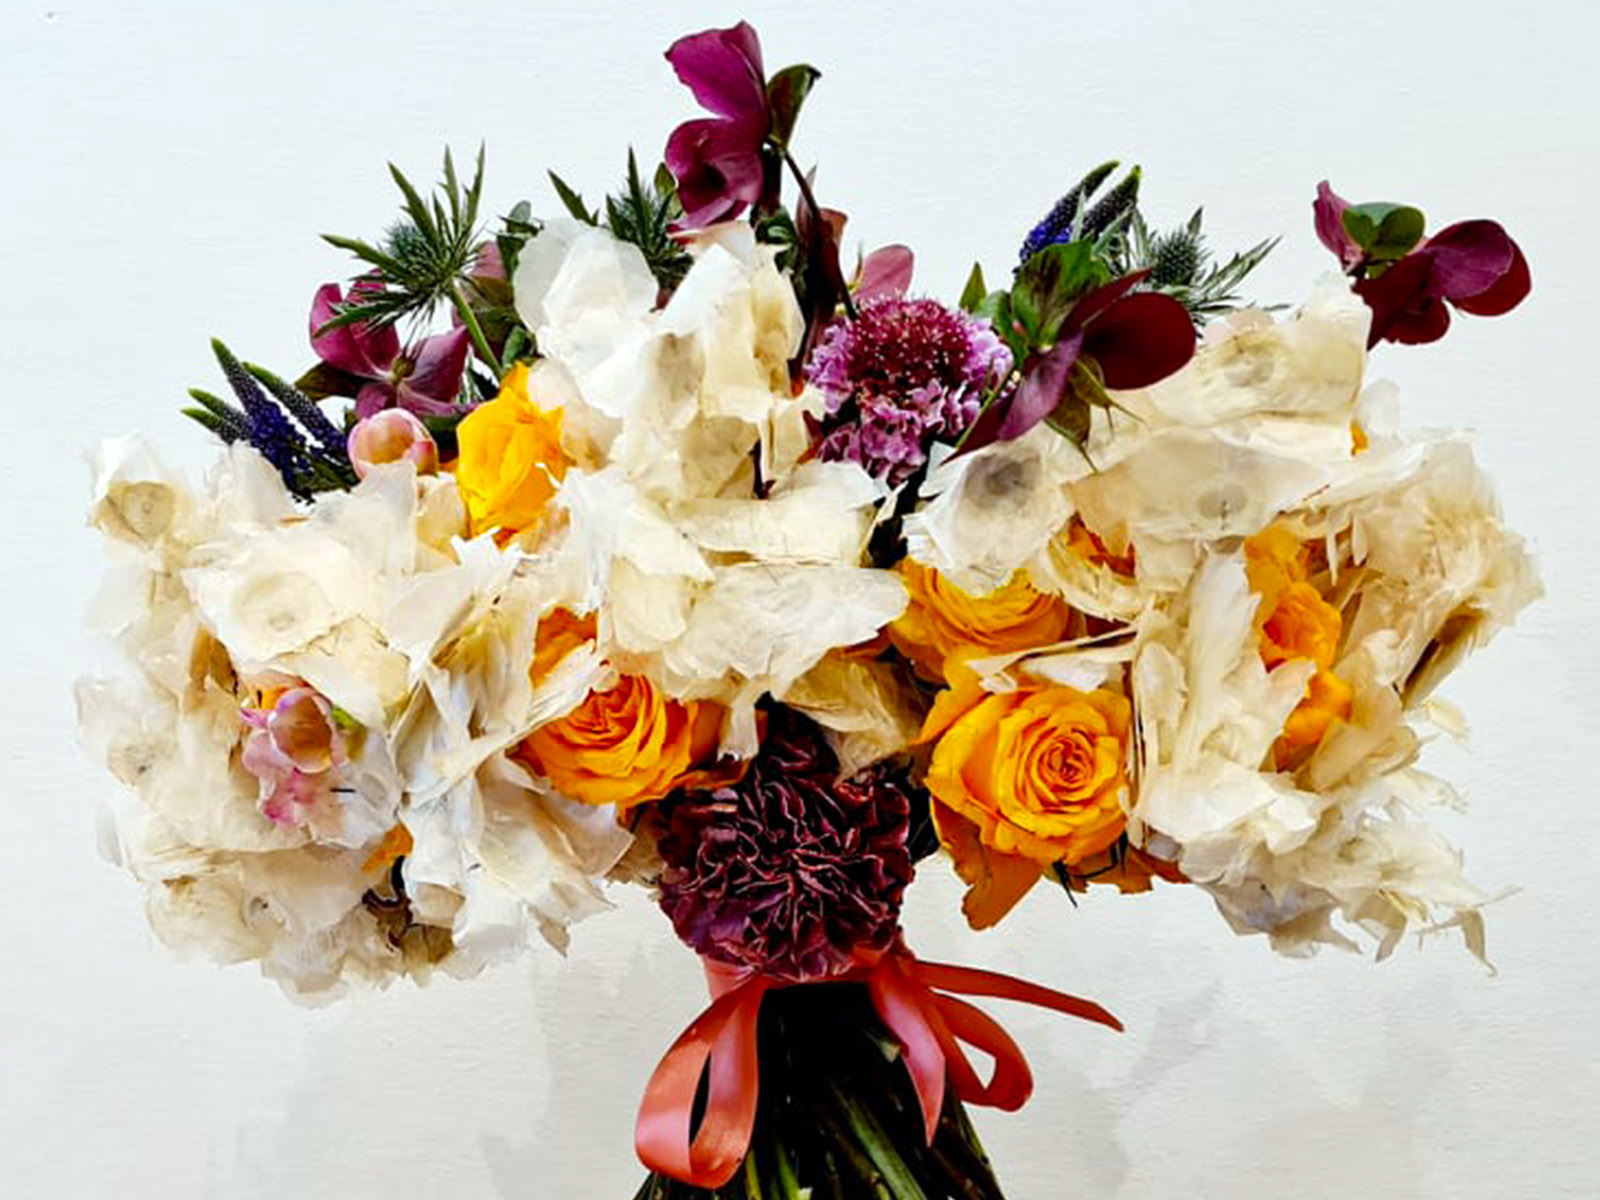 Angelica Lacarbonara - Rose Malaga bouquet on Thursd